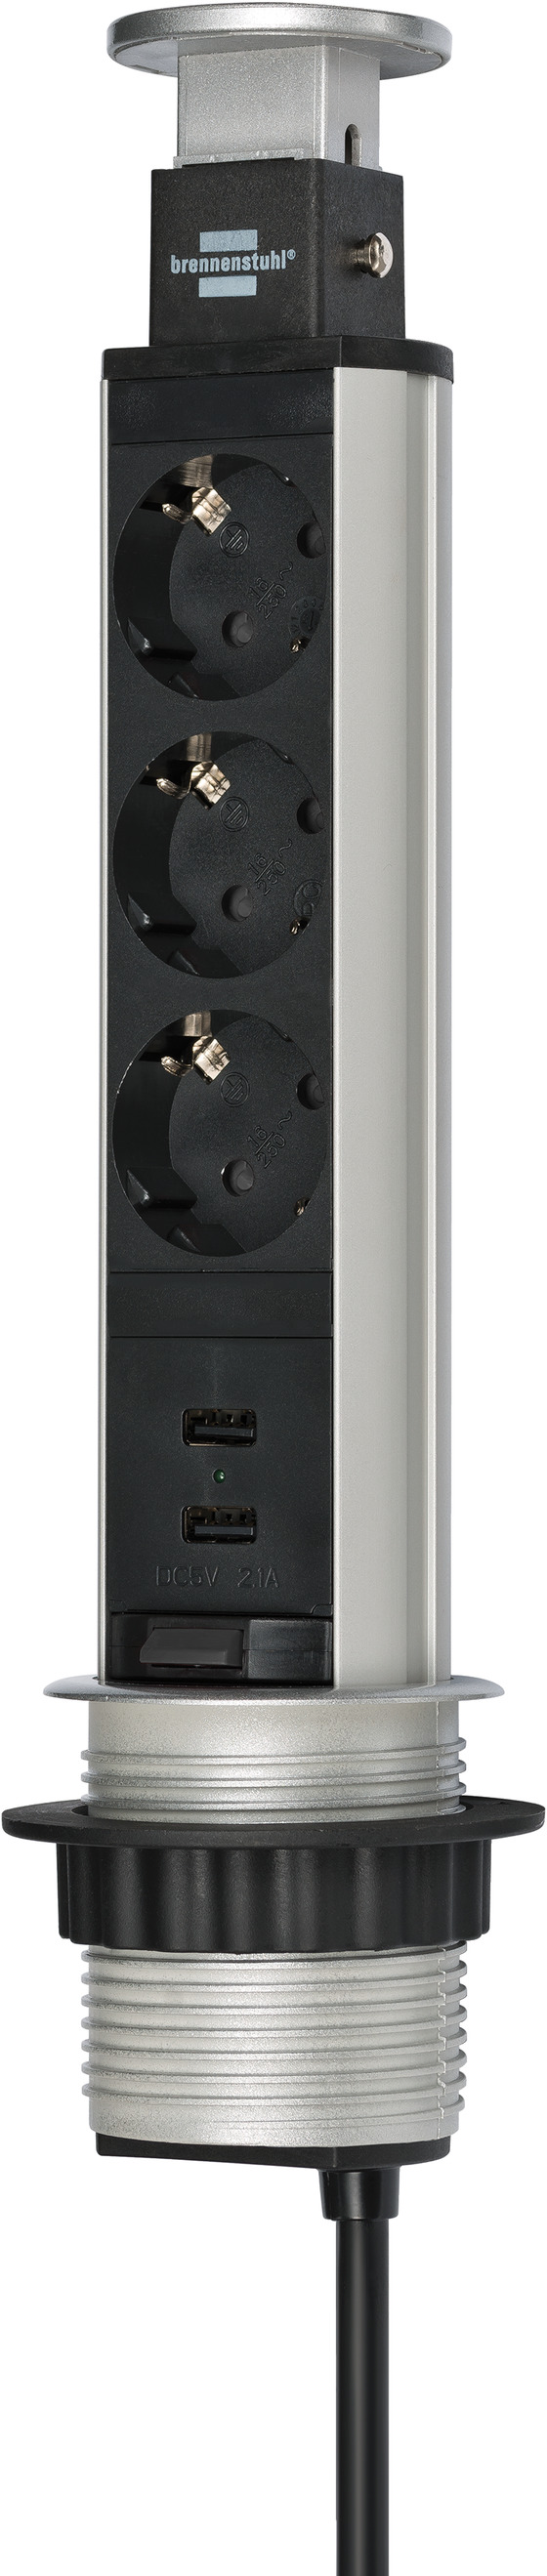 Tower Power regleta de enchufe de mesa con conector USB Enchufe 3